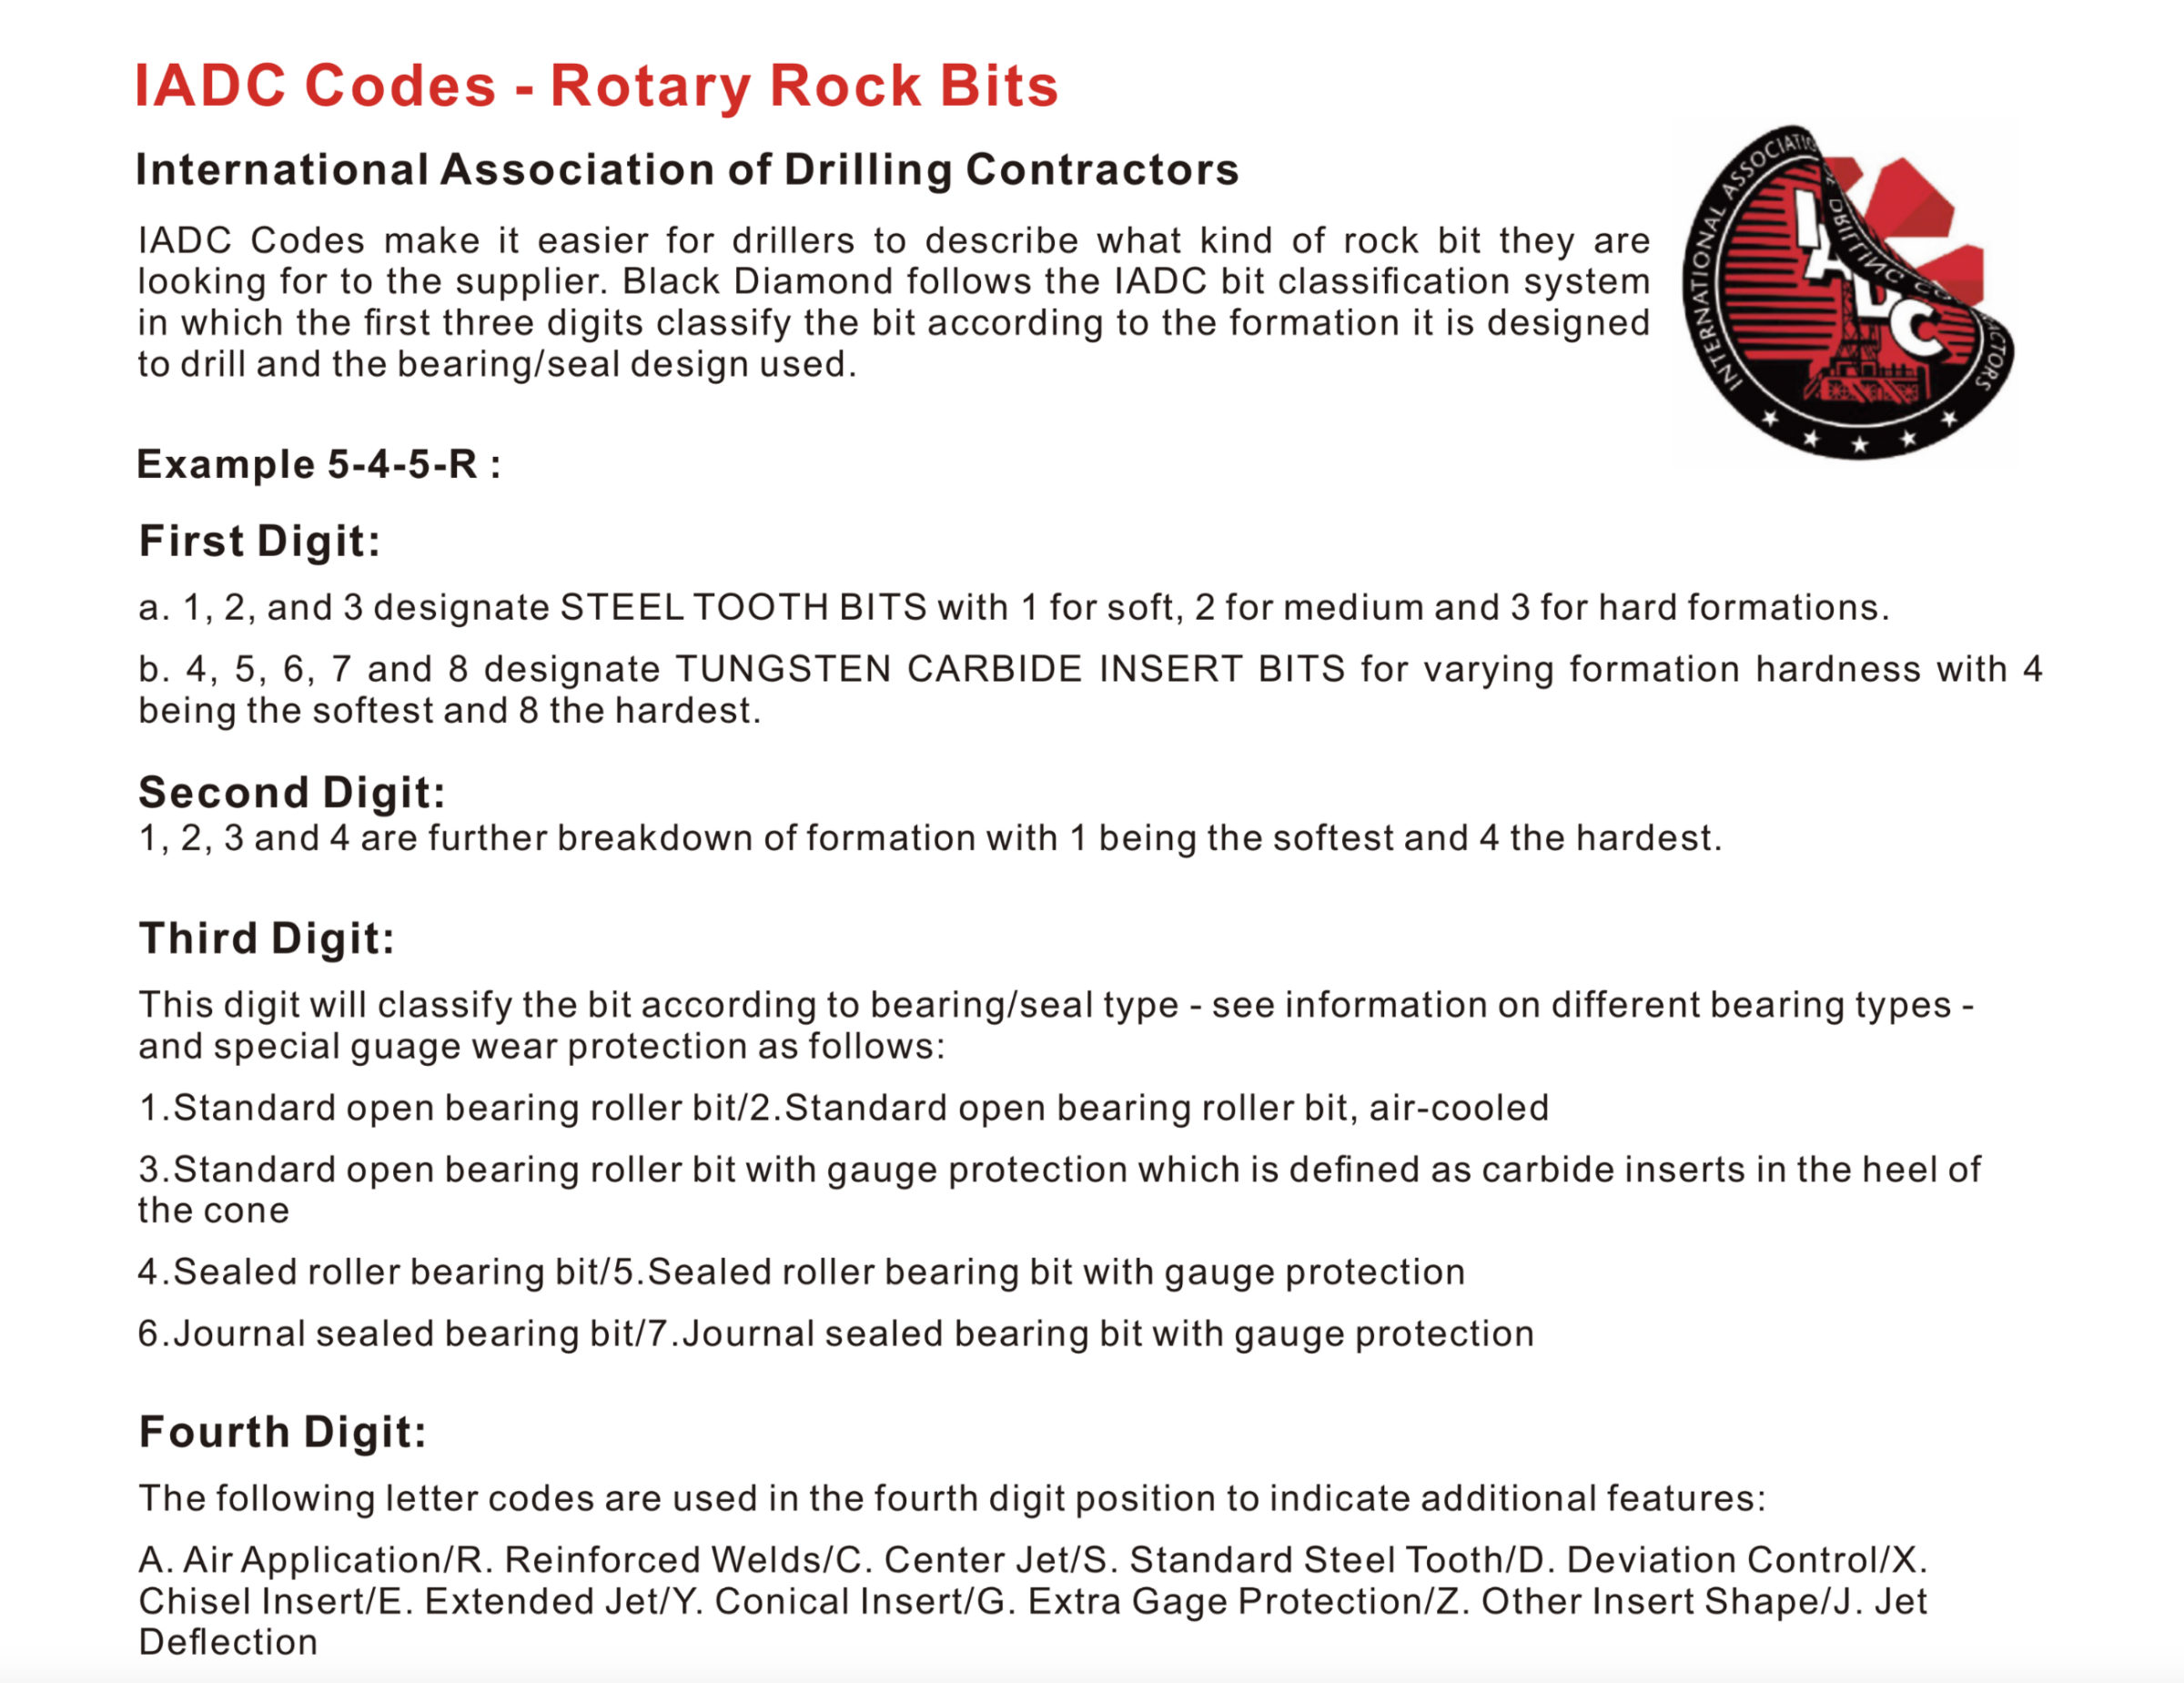 IADC Codes Rotary Rock Bits Digit Codes